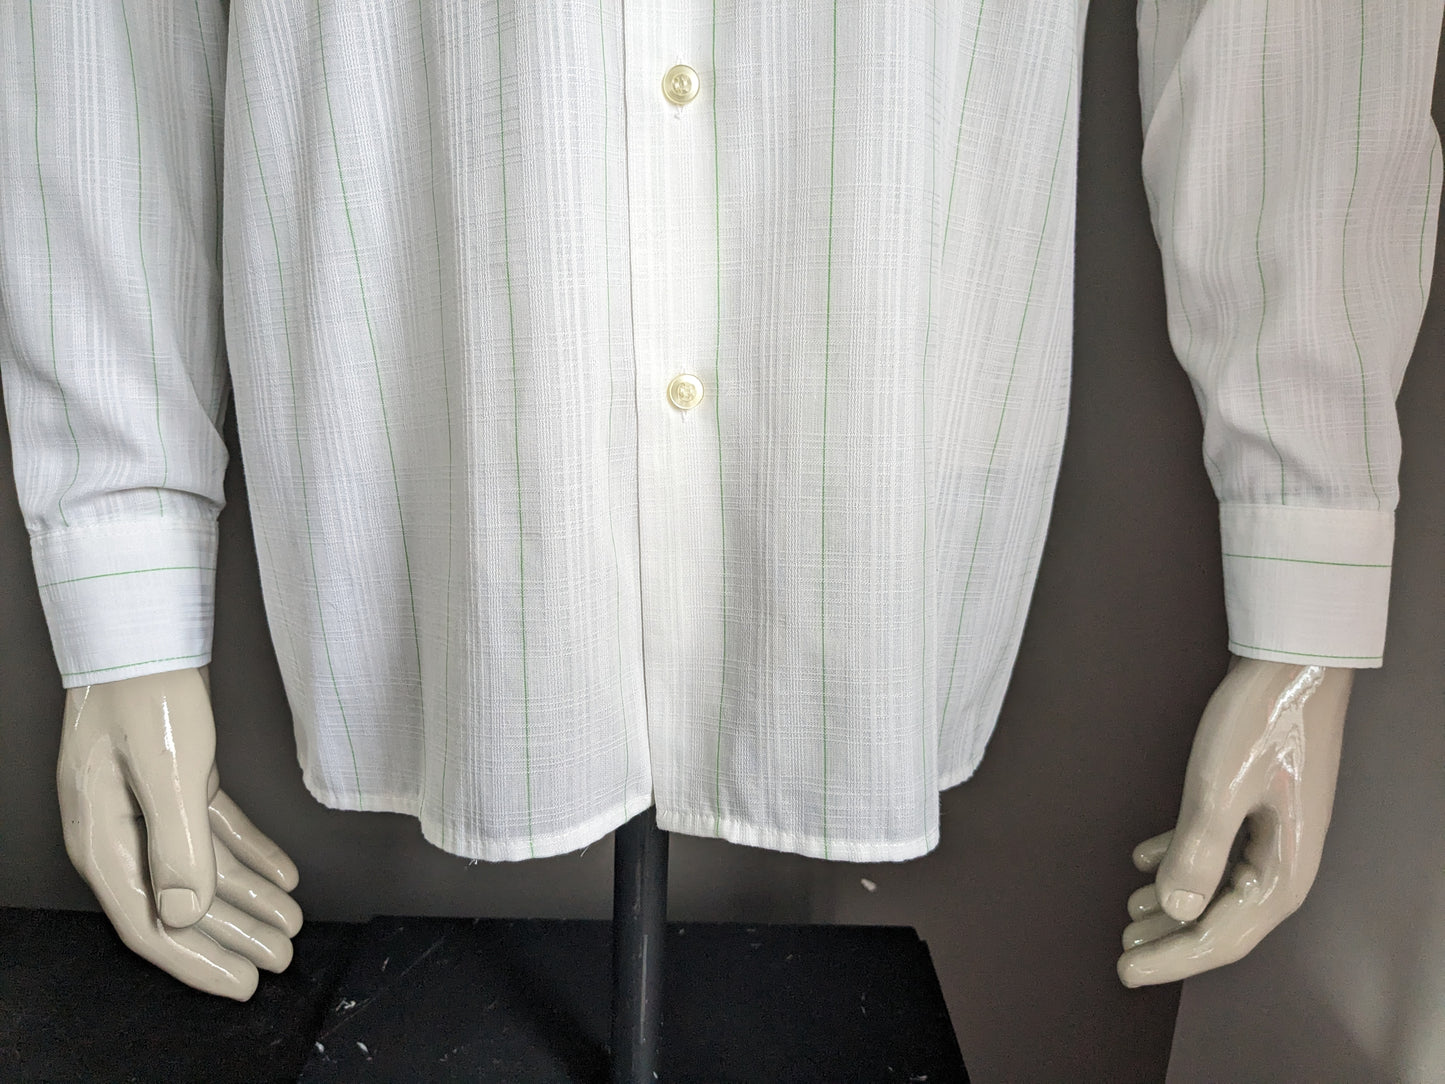 Vintage Labod 70's overhemd. Wit Groen geruit. Maat XL.